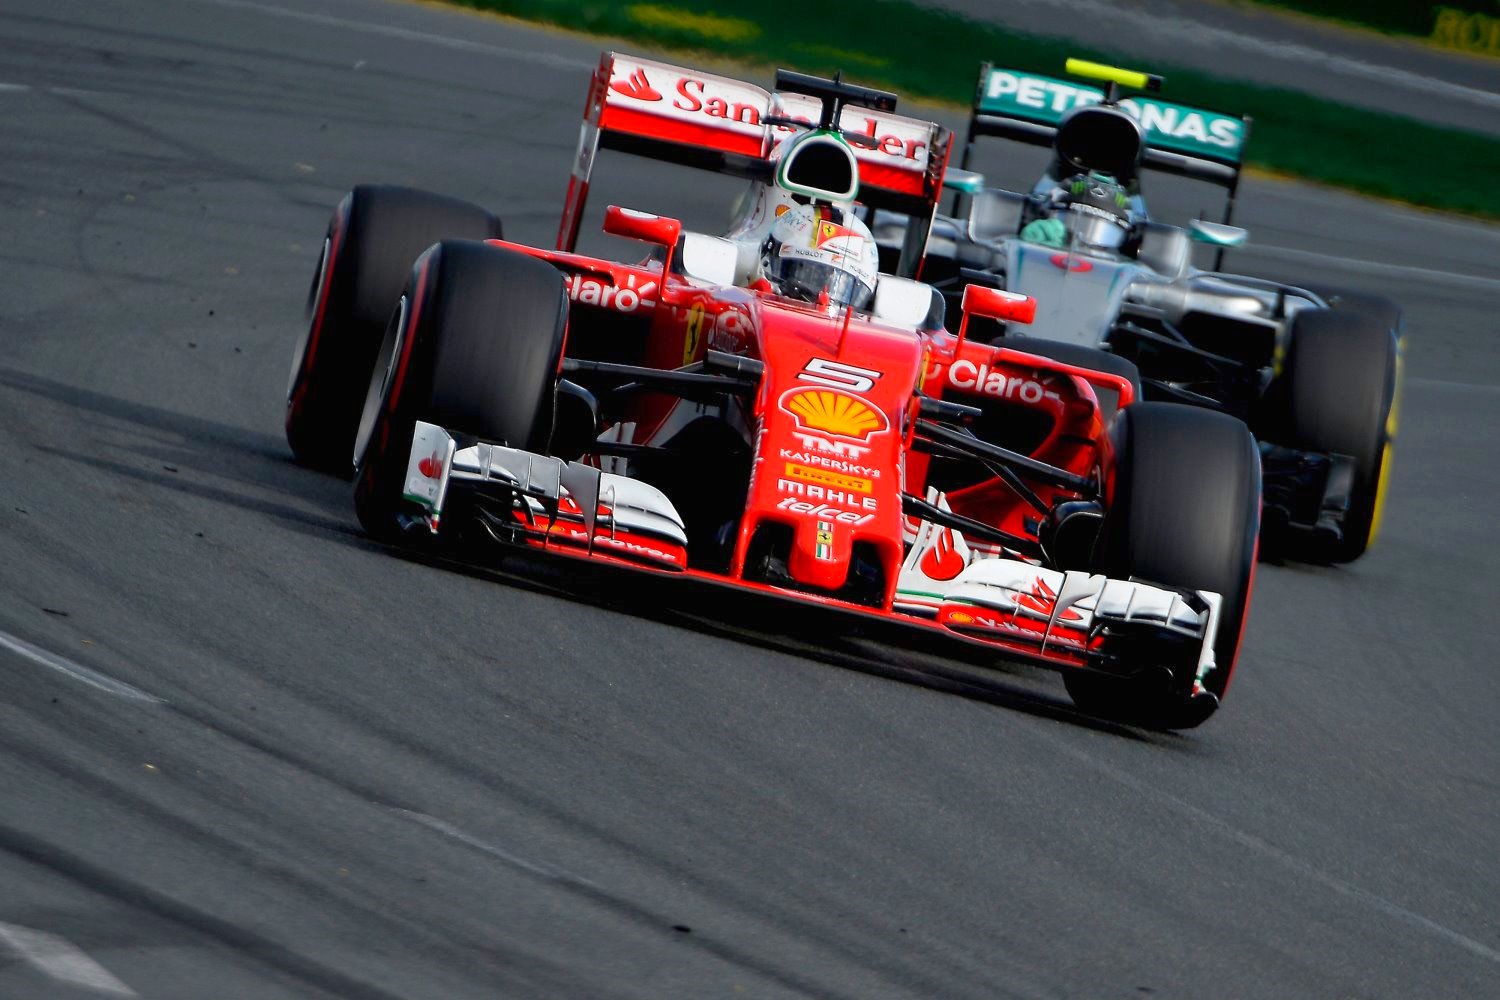 Can Ferrari really beat sandbagging Mercedes?